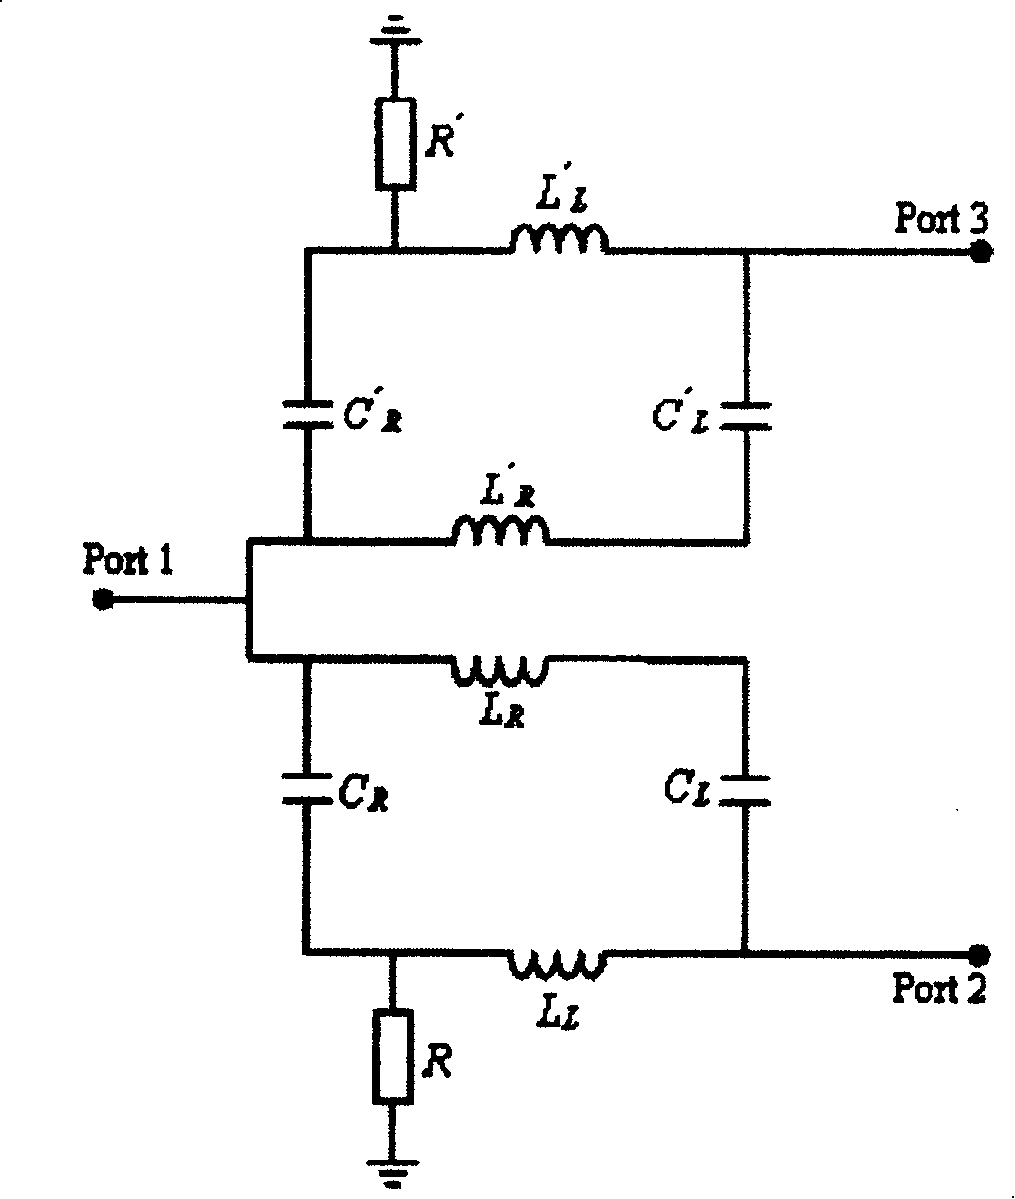 Microwave power splitter based on left-right-hand composite transmission line